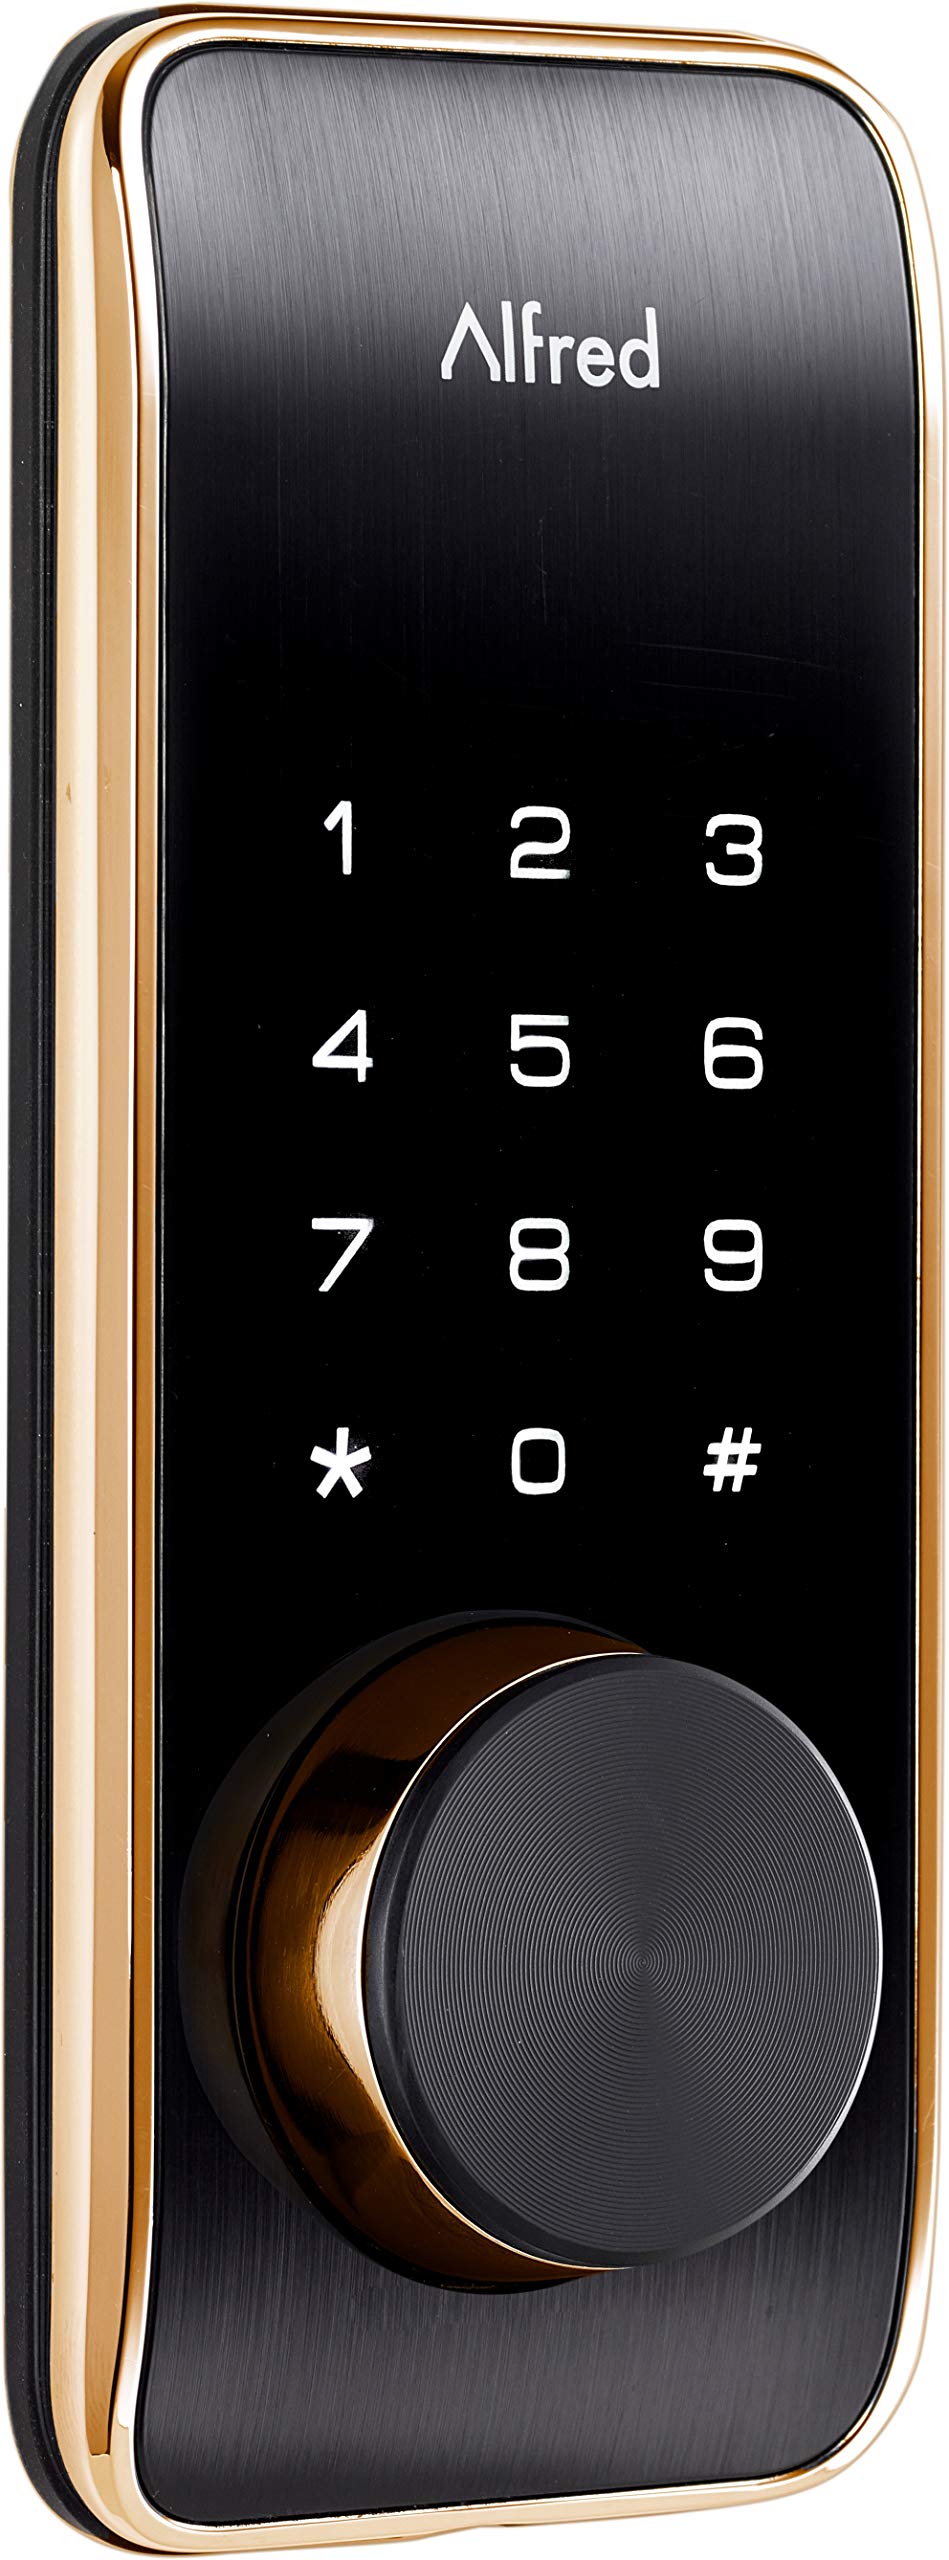 Alfred DB2-B Smart Door Lock Deadbolt Touchscreen Keypad, Pin Code + Key Entry + Bluetooth, Up to 20 Pin Codes (Gold)